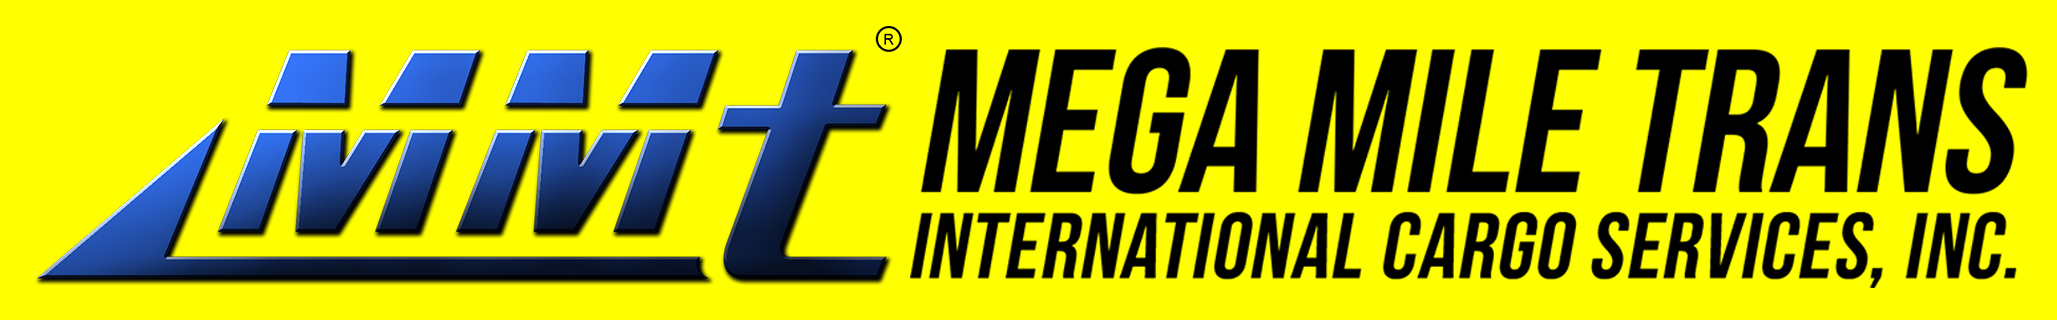 Mega Mile Trans International Cargo Services, Inc.